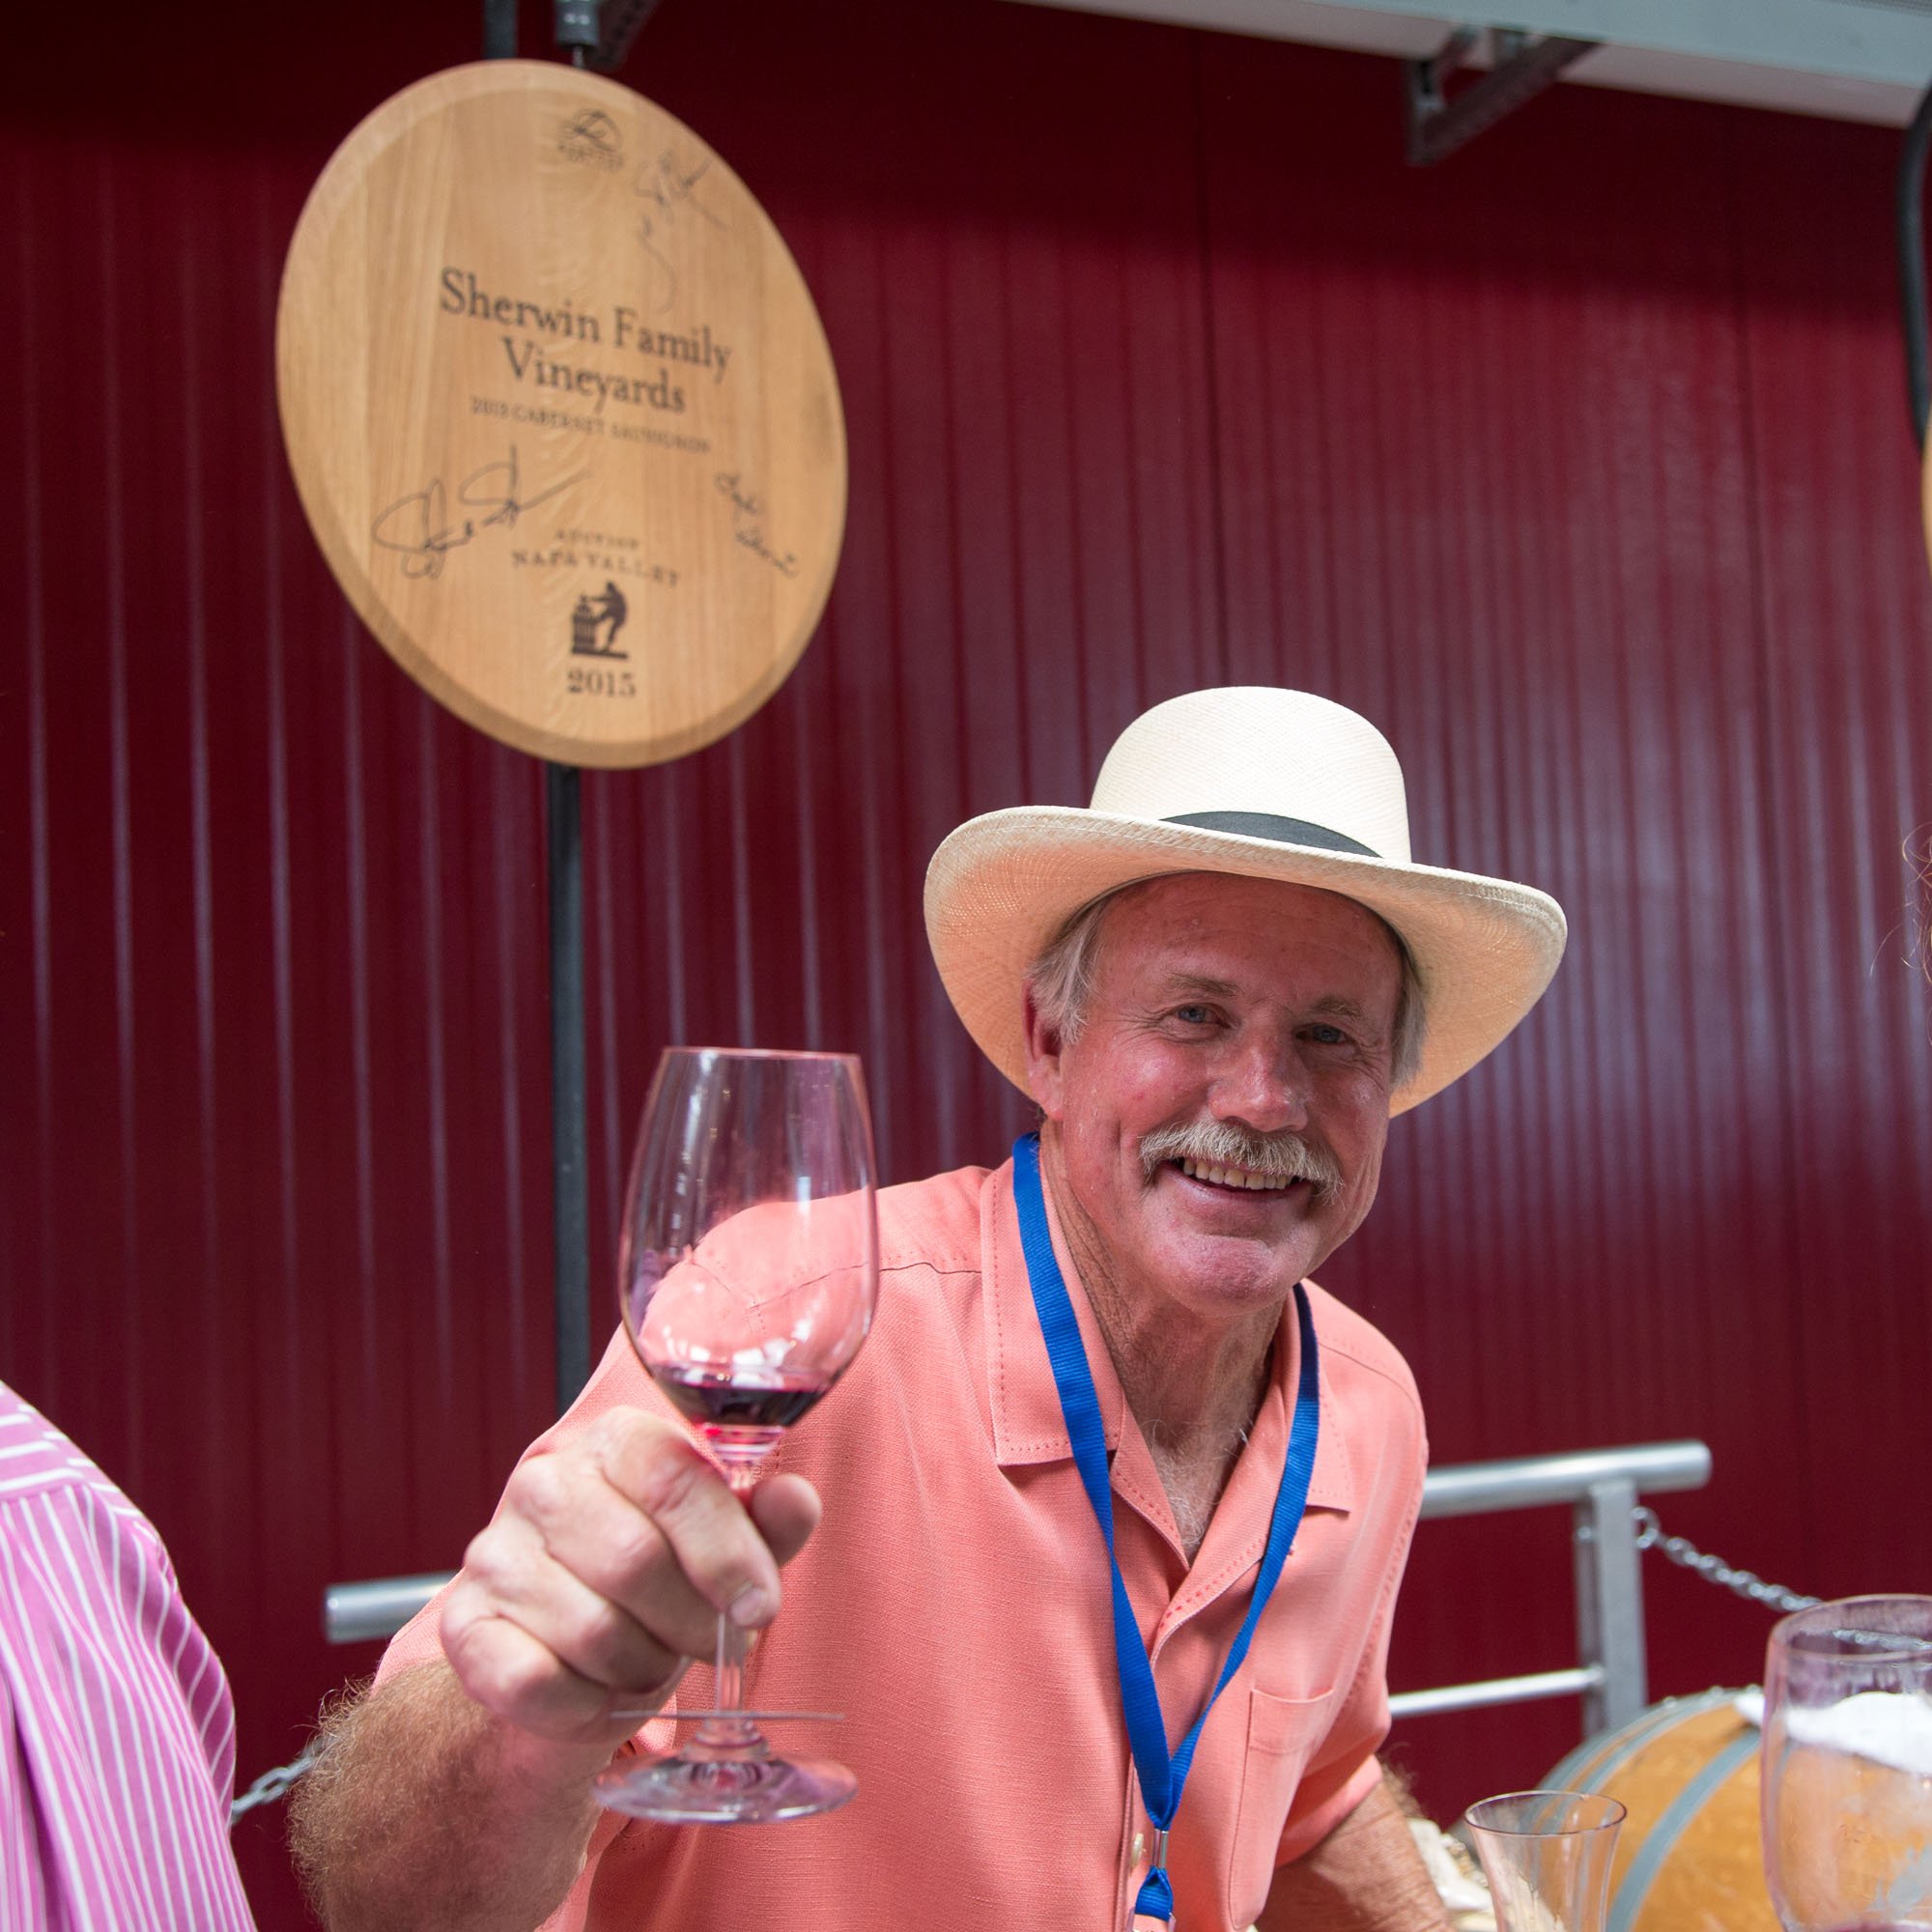 Steve Sherwin, vintner at Sherwin Family Vineyards